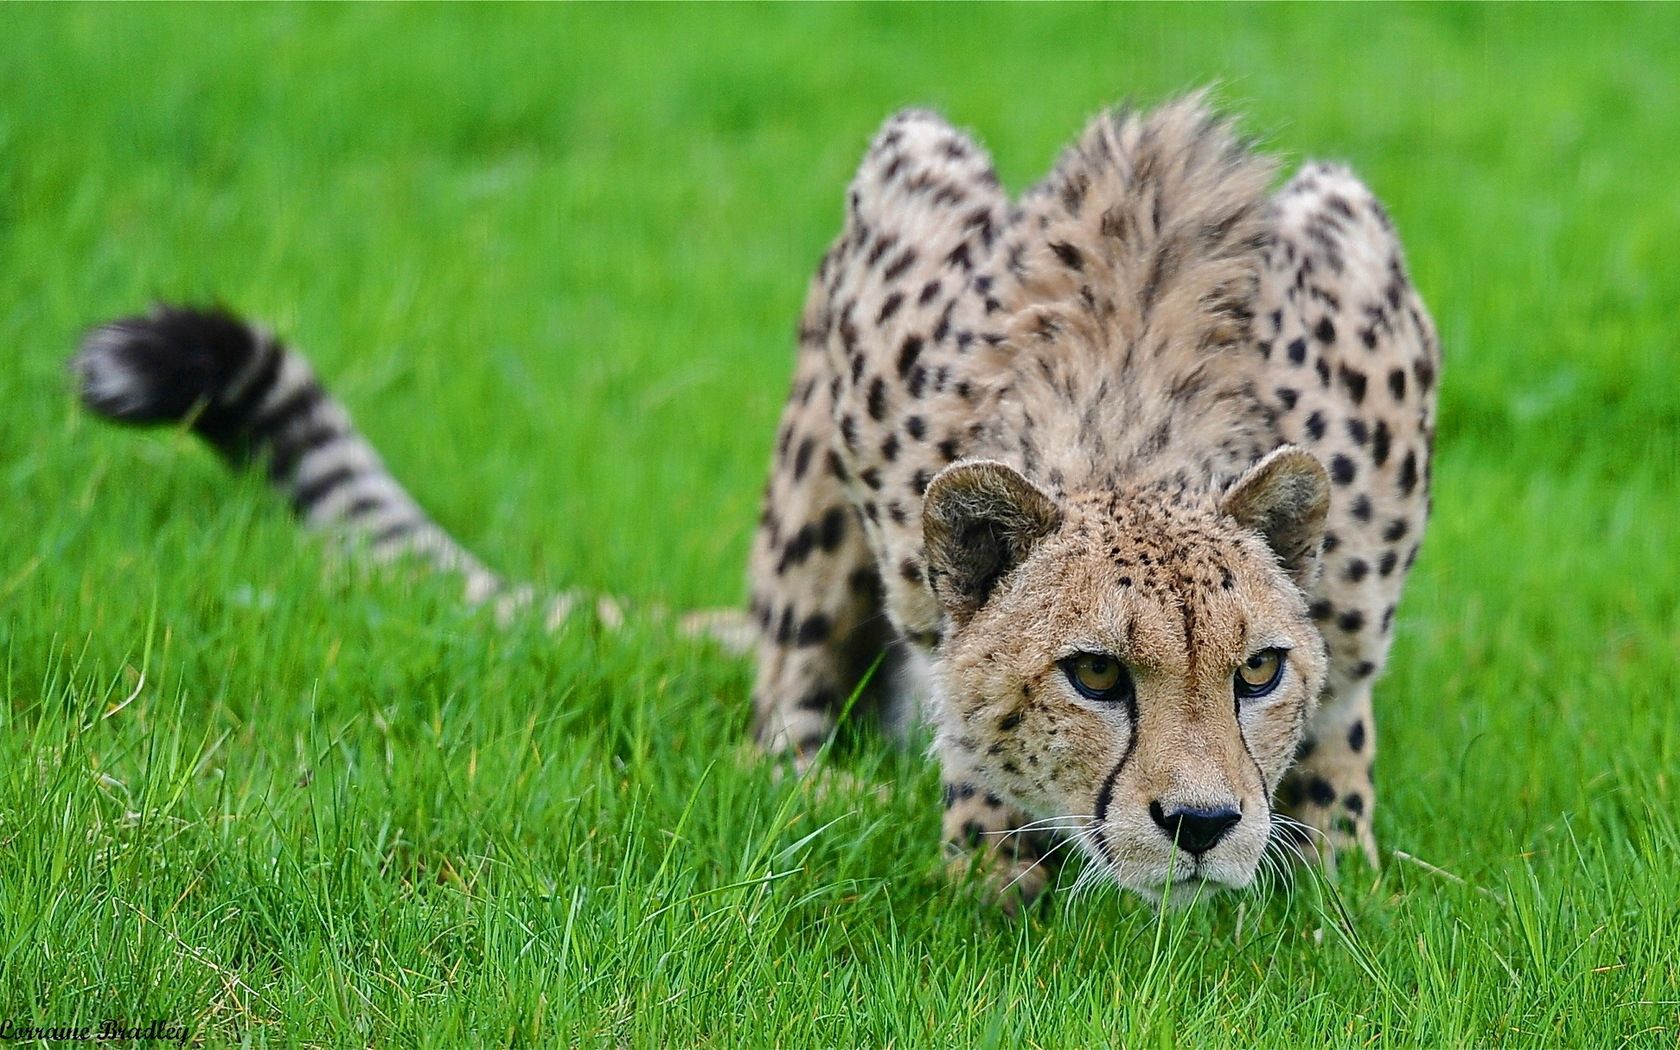 animals, grass, cheetah, spotted, spotty, big cat, hide, hunting, hunt, pose, lurk